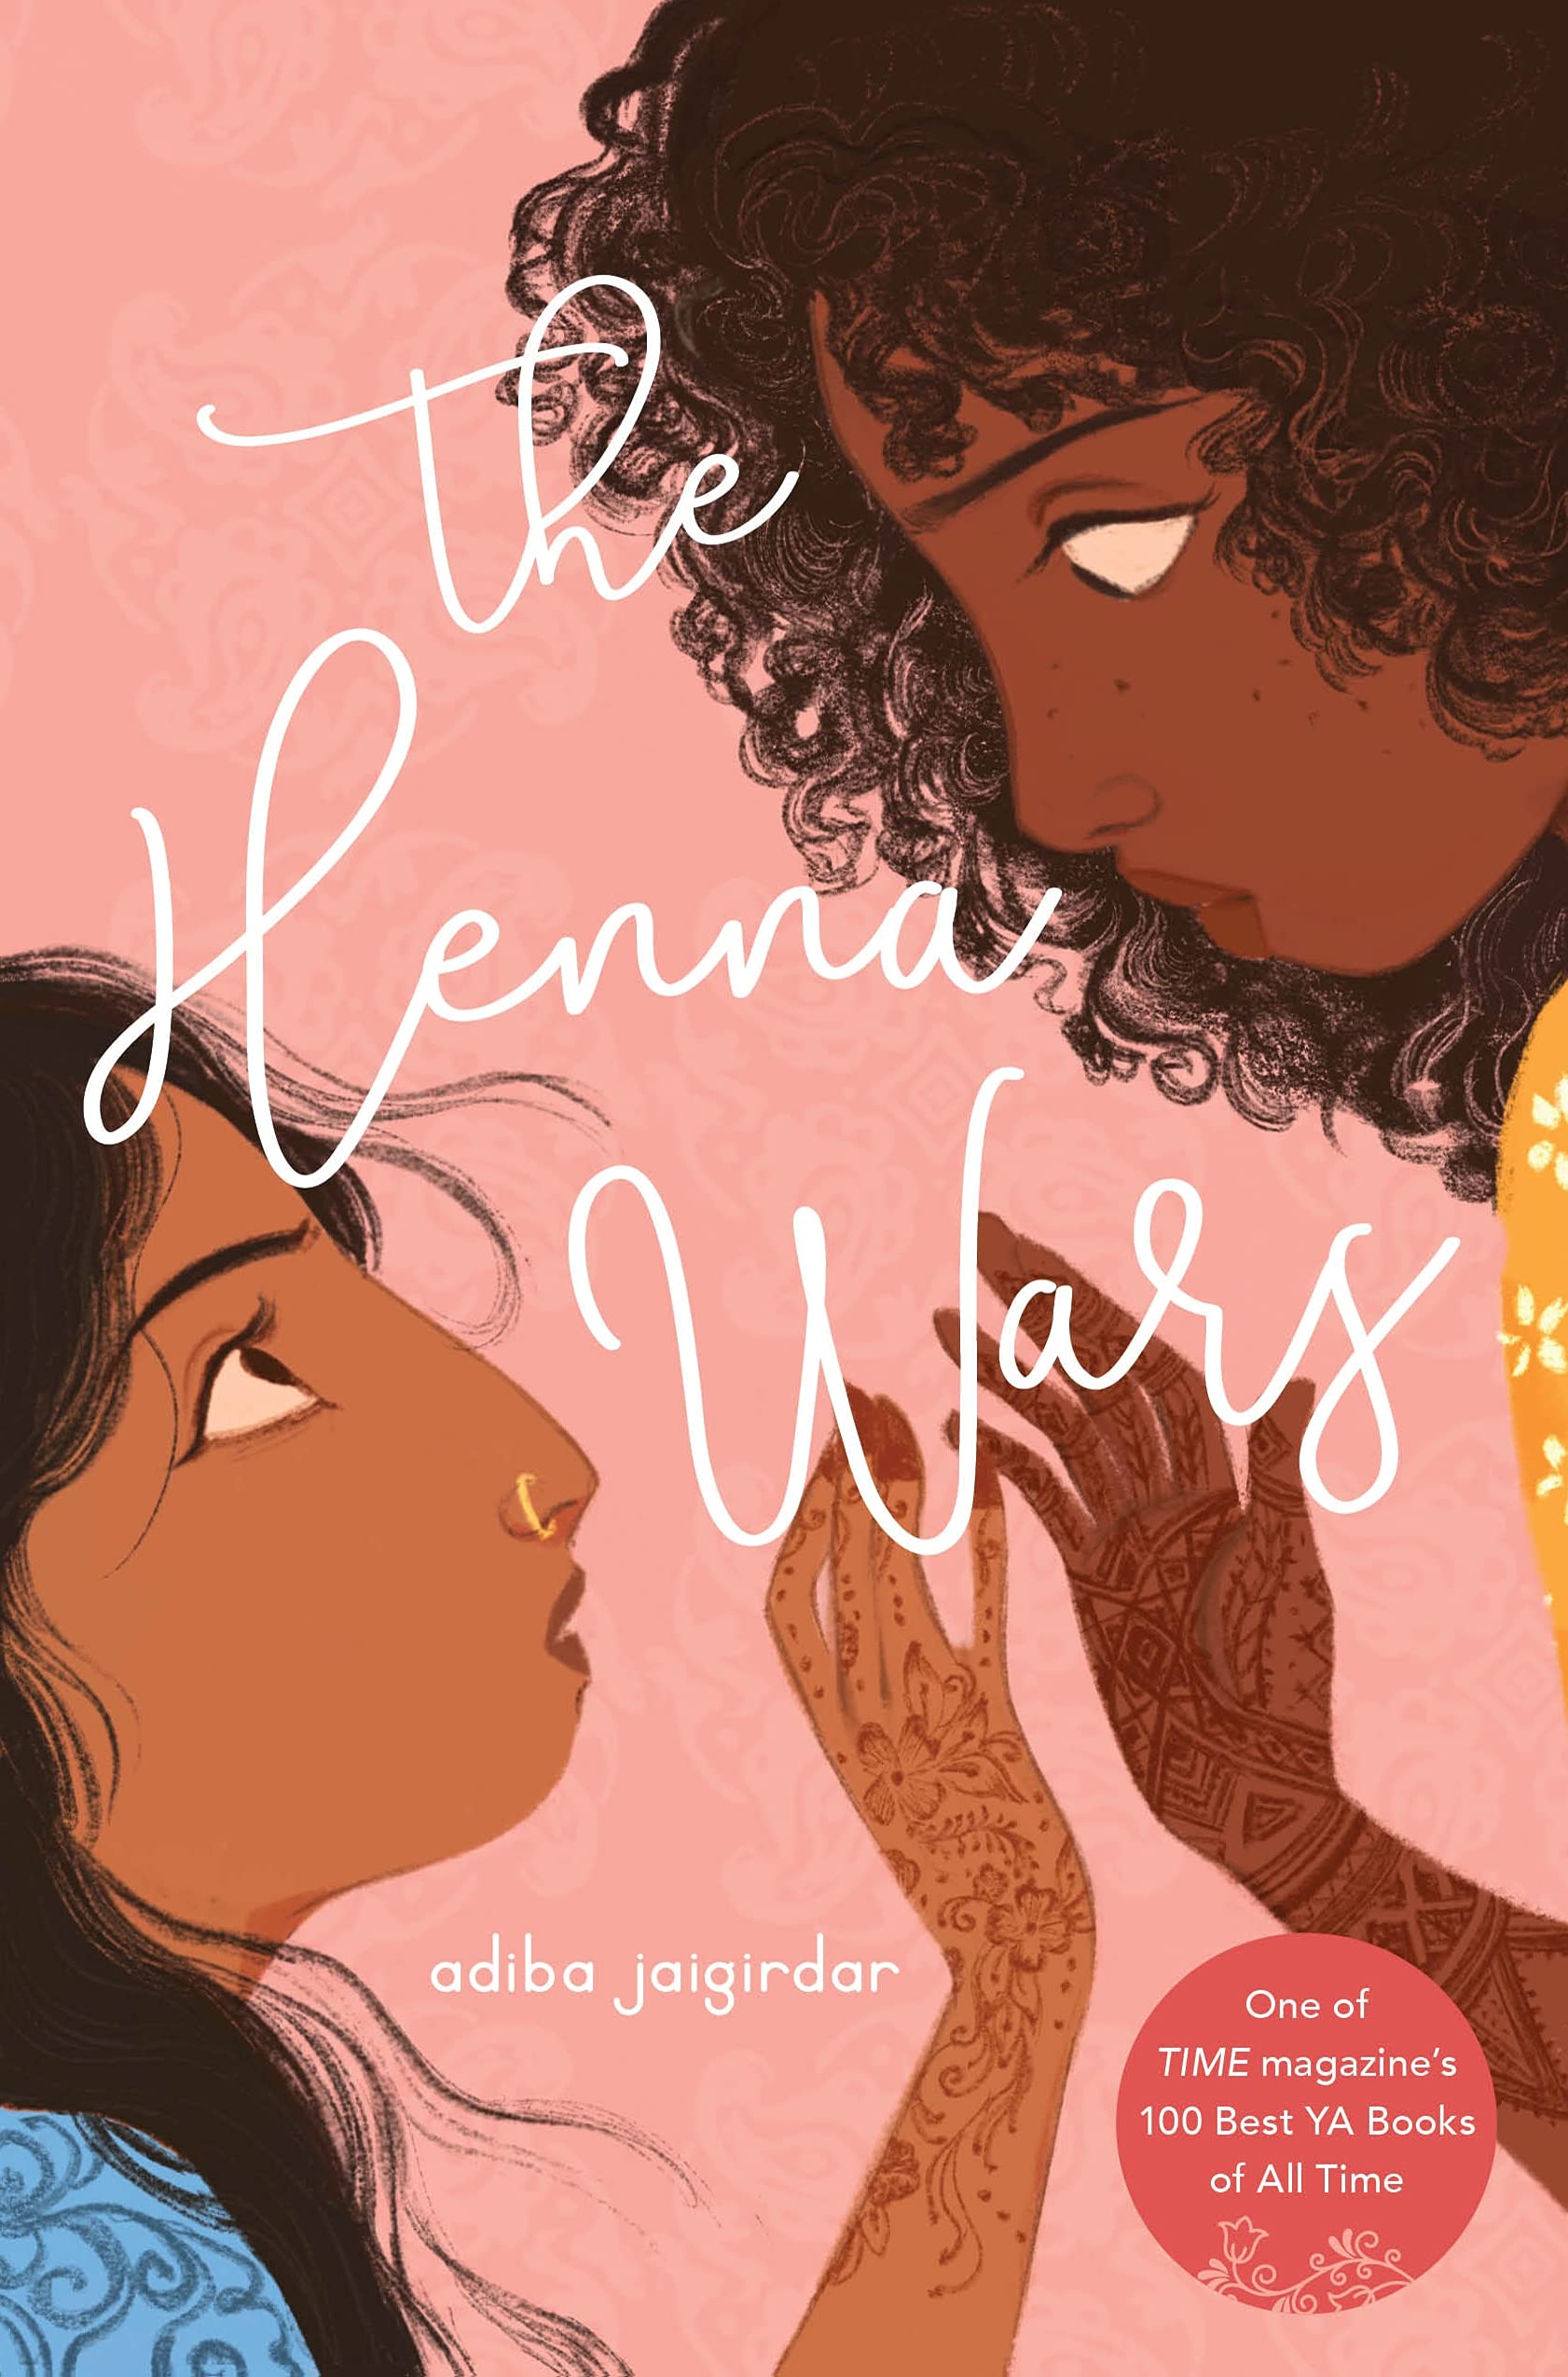 Book cover of Henna Wars by Adiba Jaigirdar